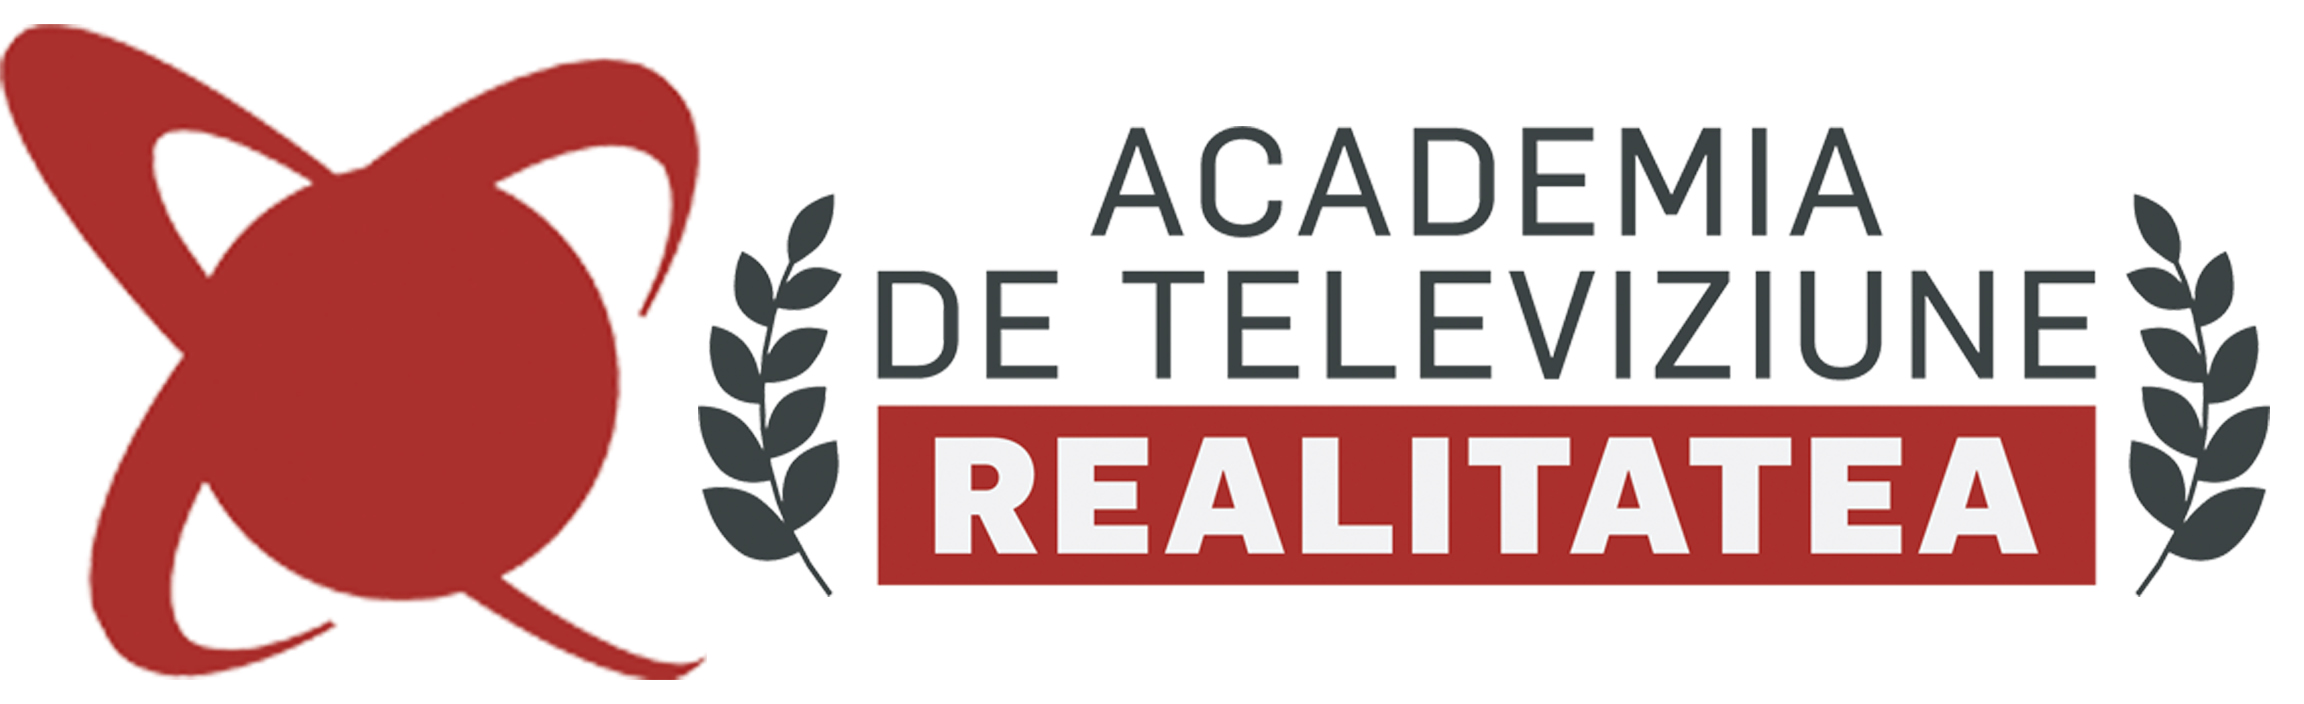 Academia Realitatea